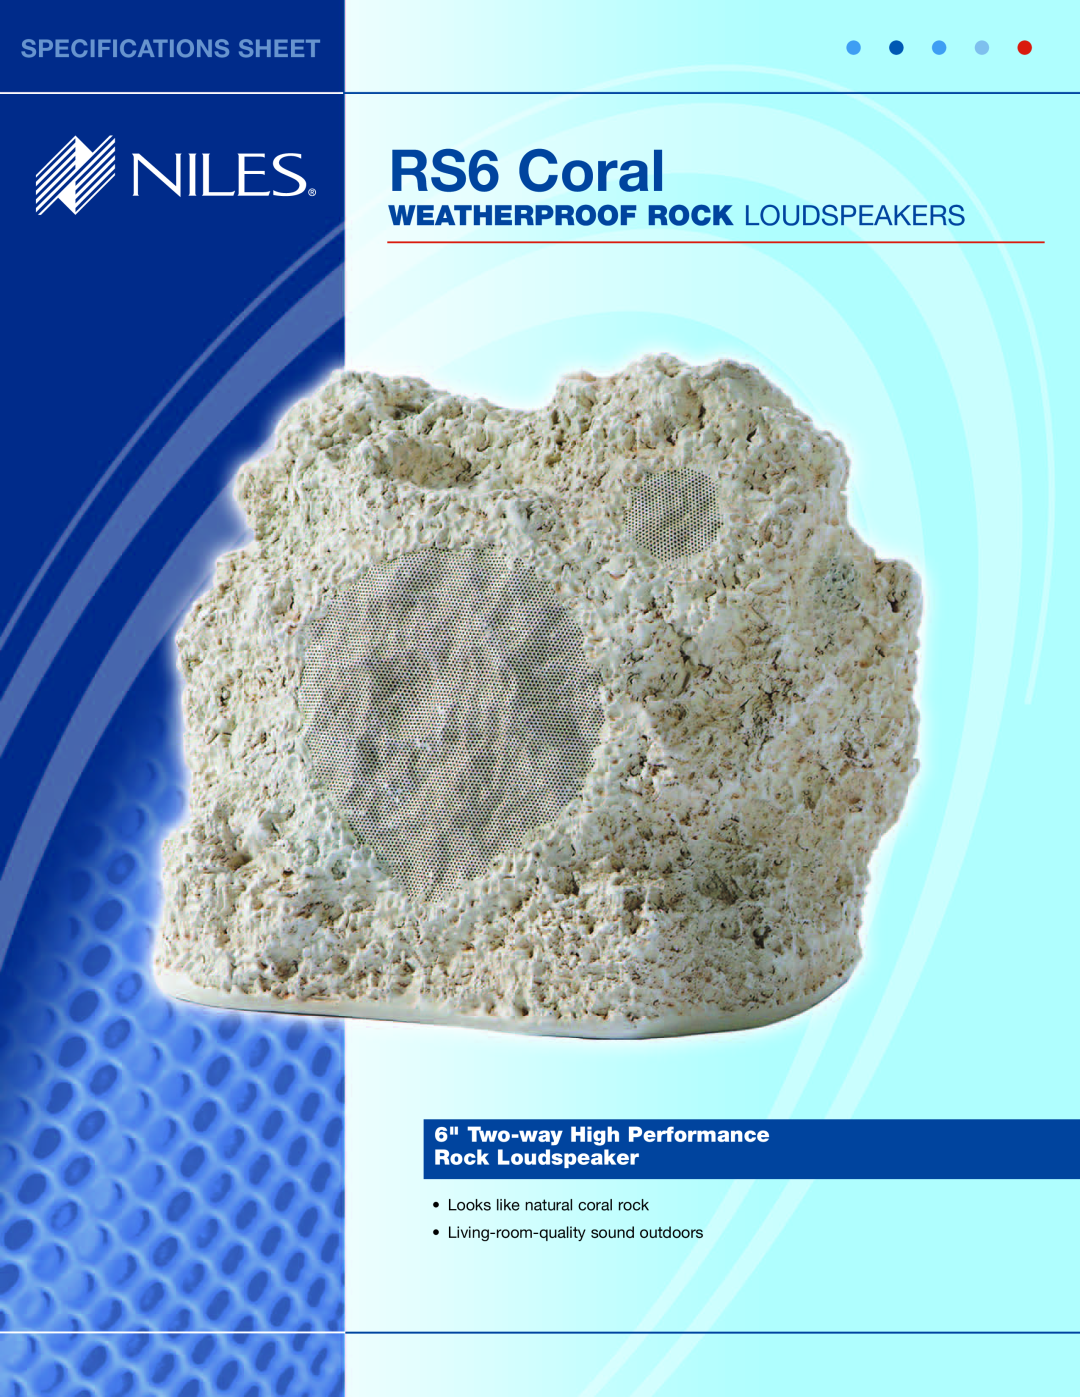 Niles Audio specifications RS6 Coral, Weatherproof Rock Loudspeakers, Specifications Sheet 